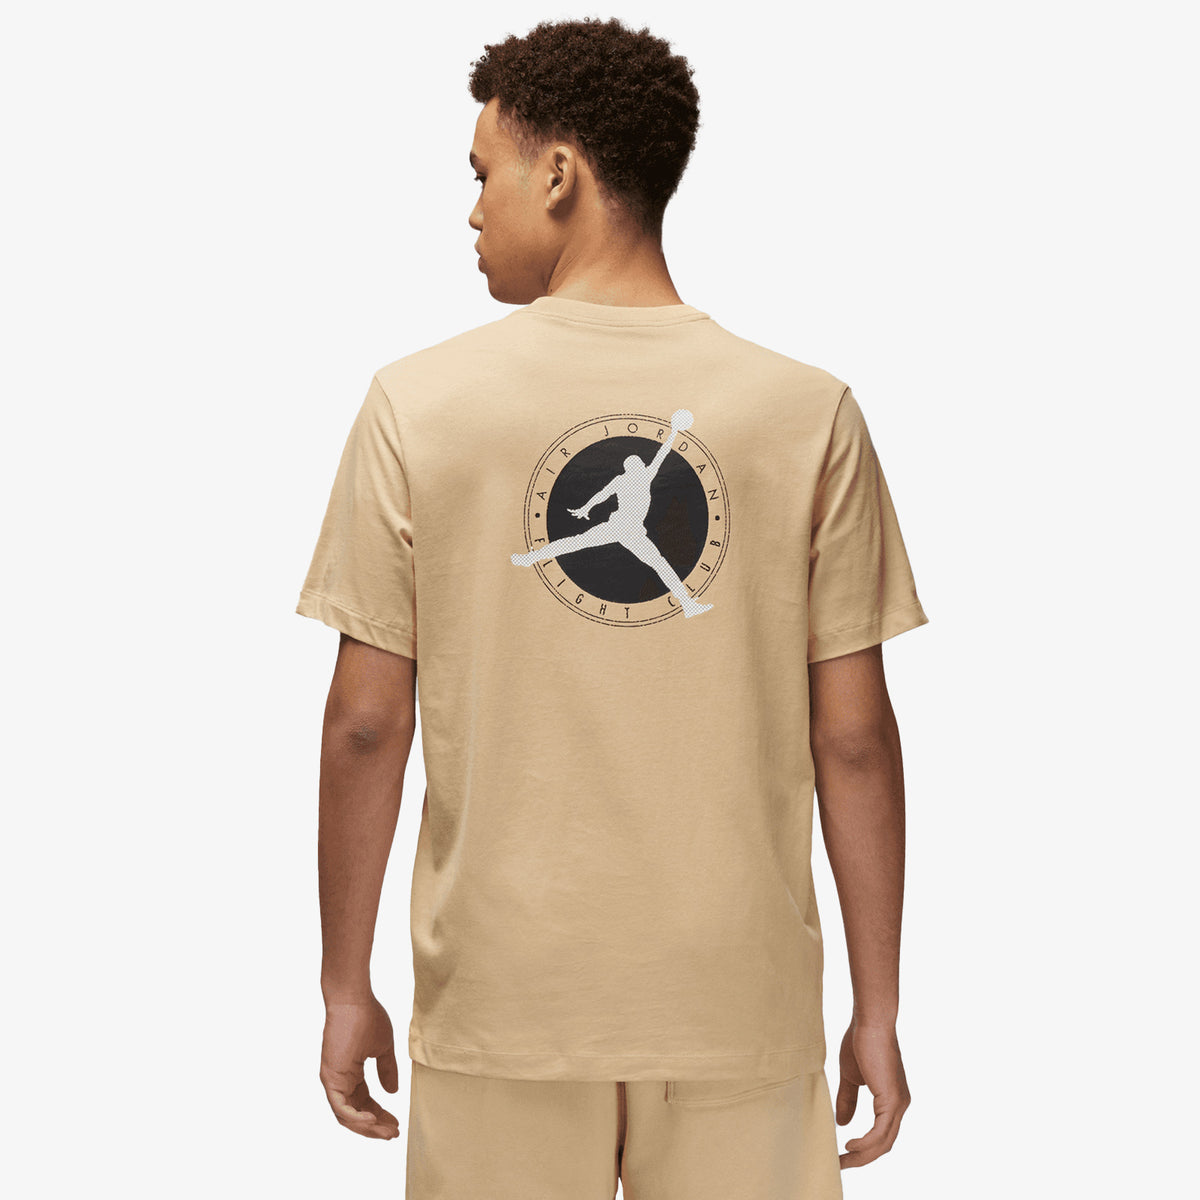 Nike Air Jordan Flight Men's T-Shirt (Black/Gold) Size M